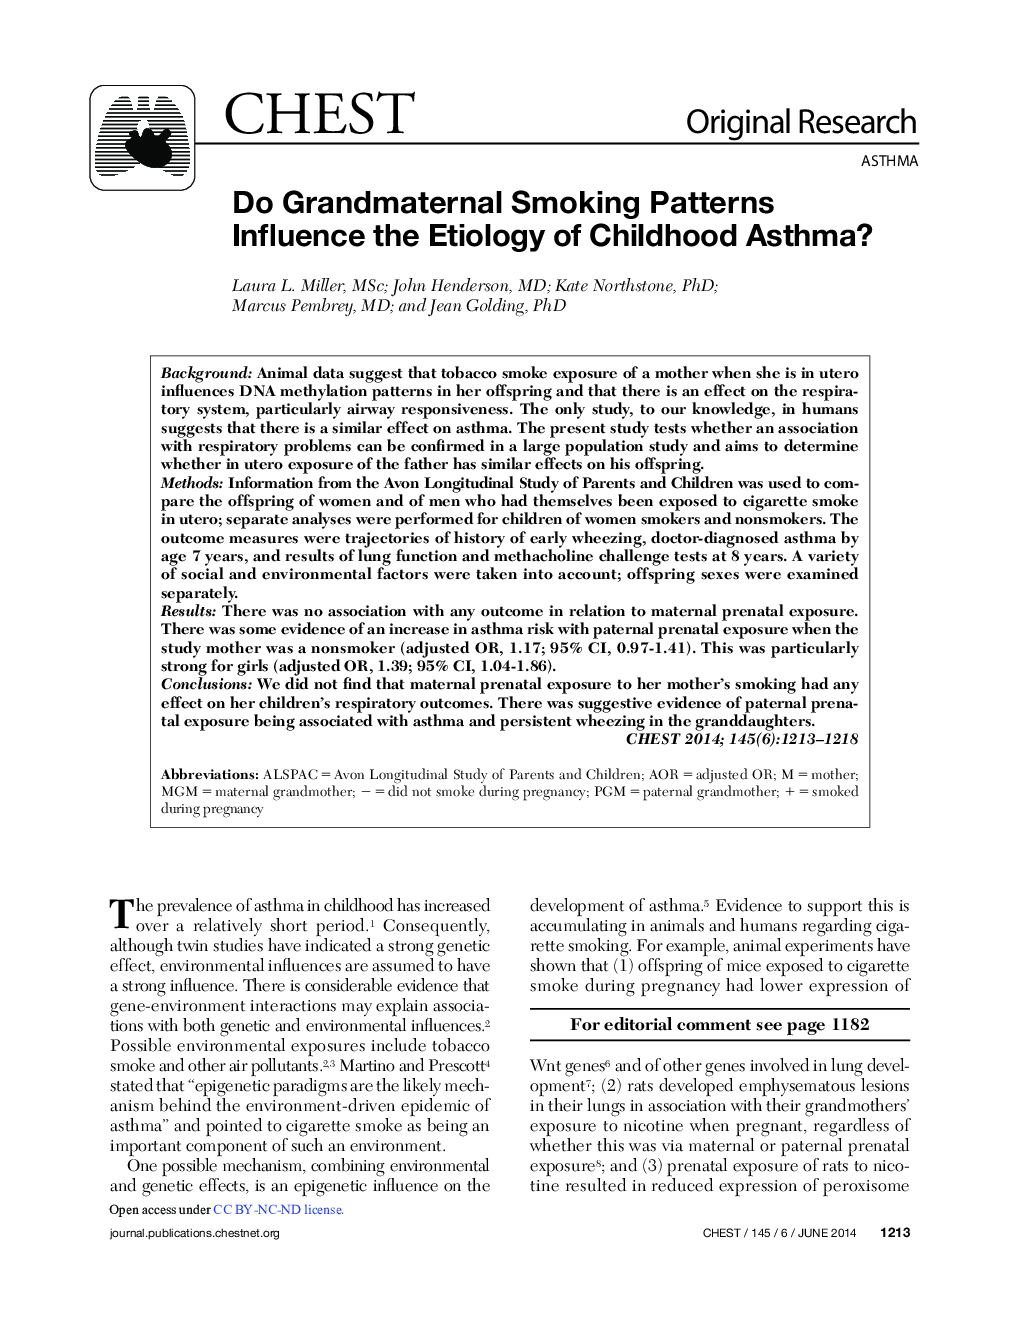 Do Grandmaternal Smoking Patterns Influence the Etiology of Childhood Asthma?